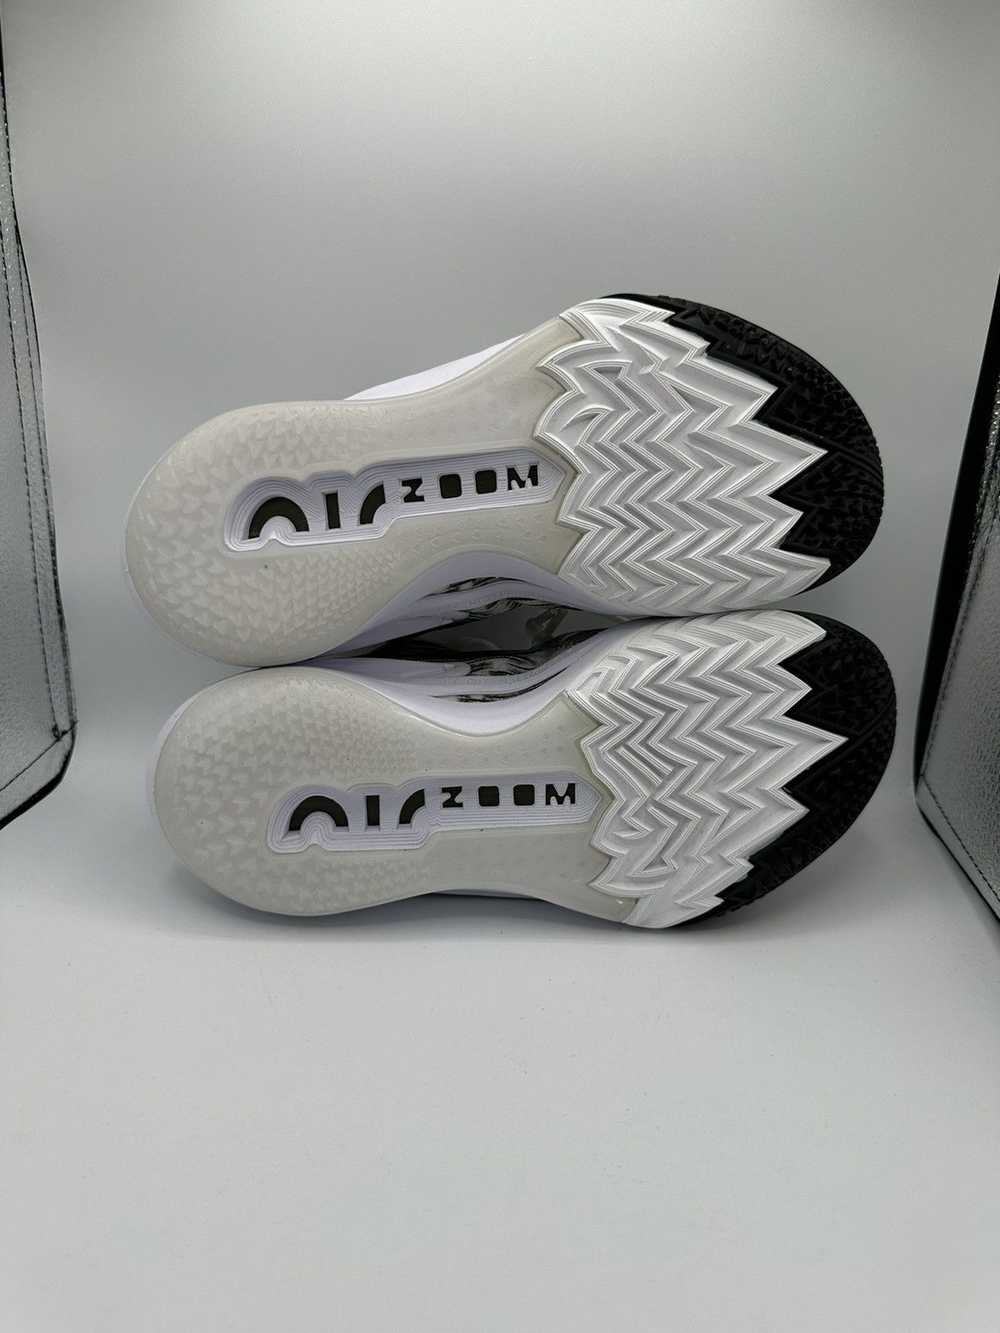 Nike Nike Air Zoom Gt Cut 2 TB “White Black” - image 5